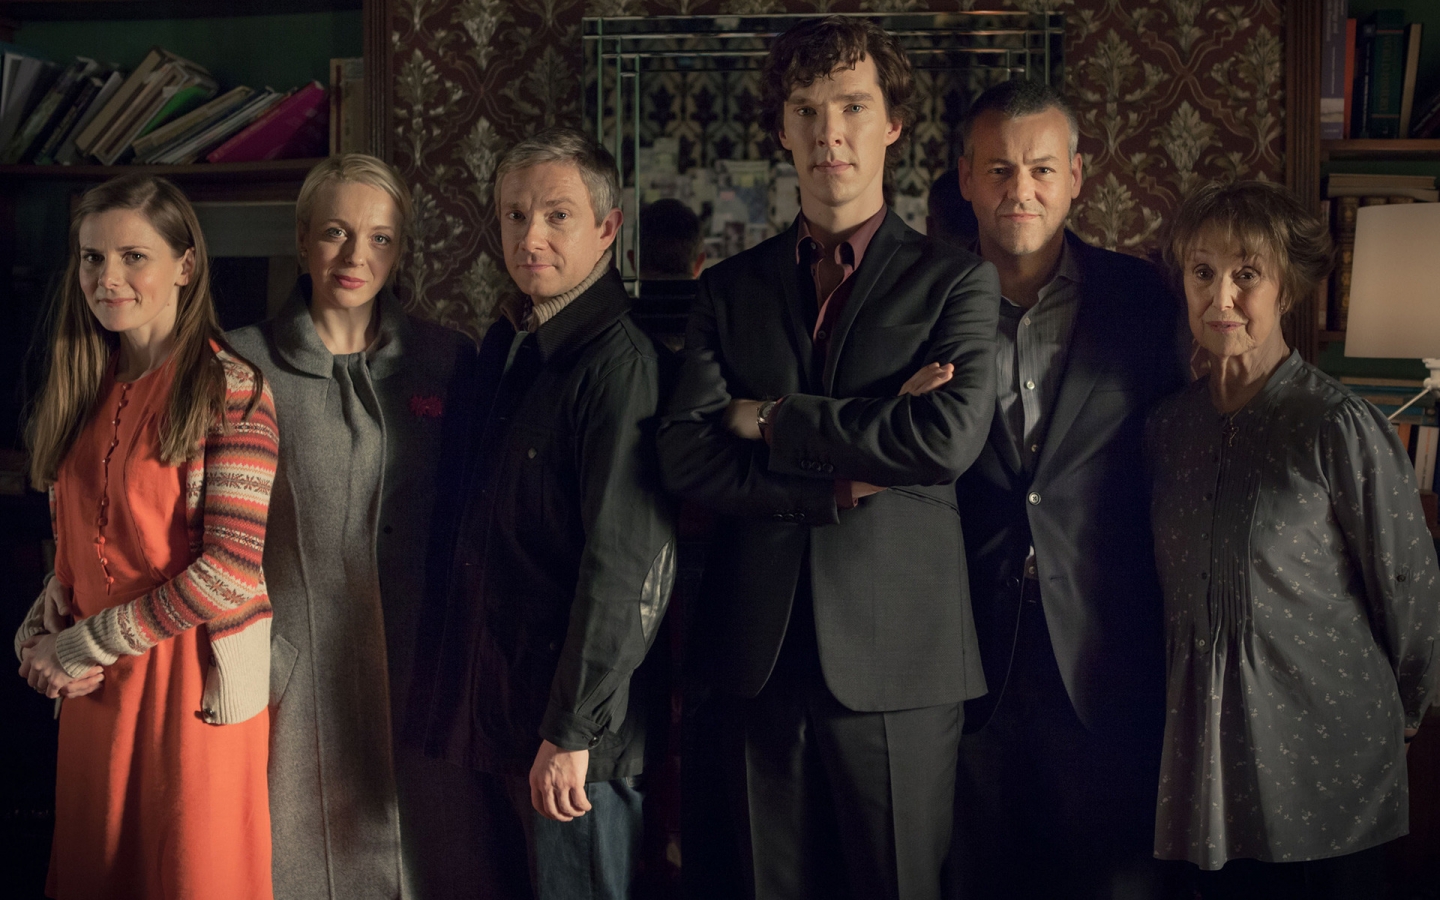 BBC Sherlock Cast for 1440 x 900 widescreen resolution